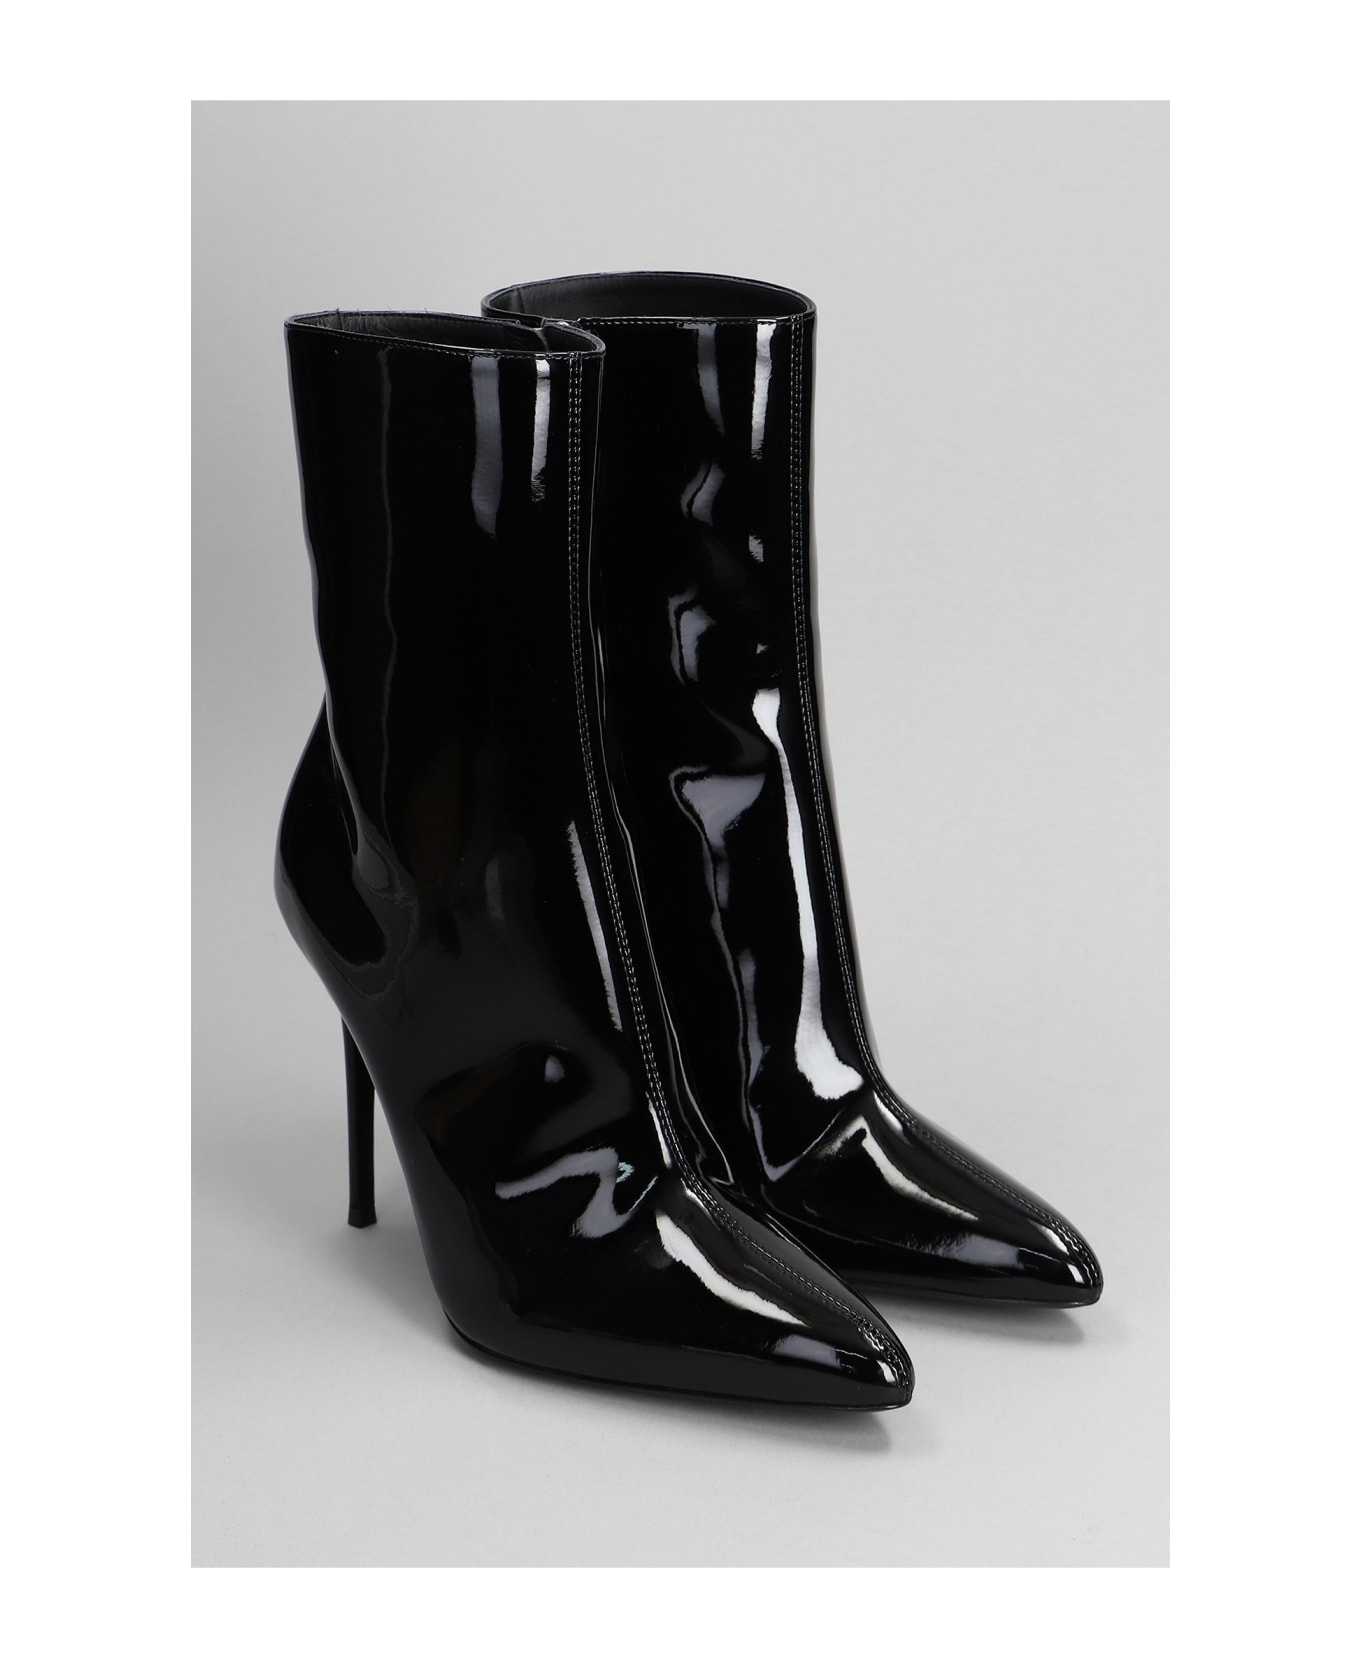 Giuseppe Zanotti Brytta High Heels Ankle Boots In Black Patent Leather - black